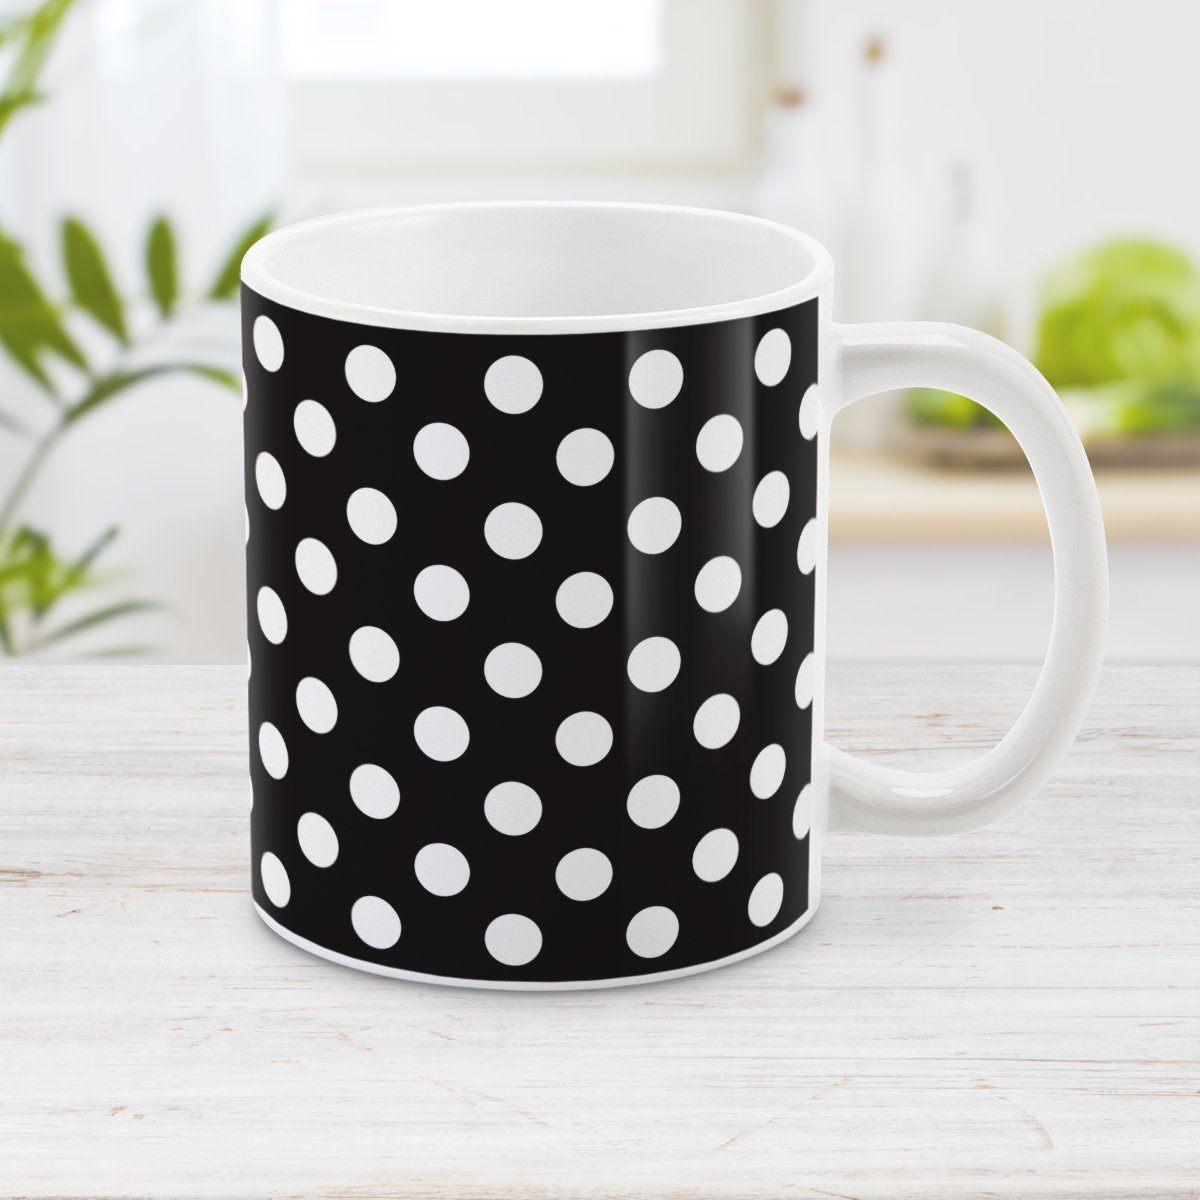 Black Polka Dot Mug - Black Polka Dot Pattern Mug at Amy's Coffee Mugs